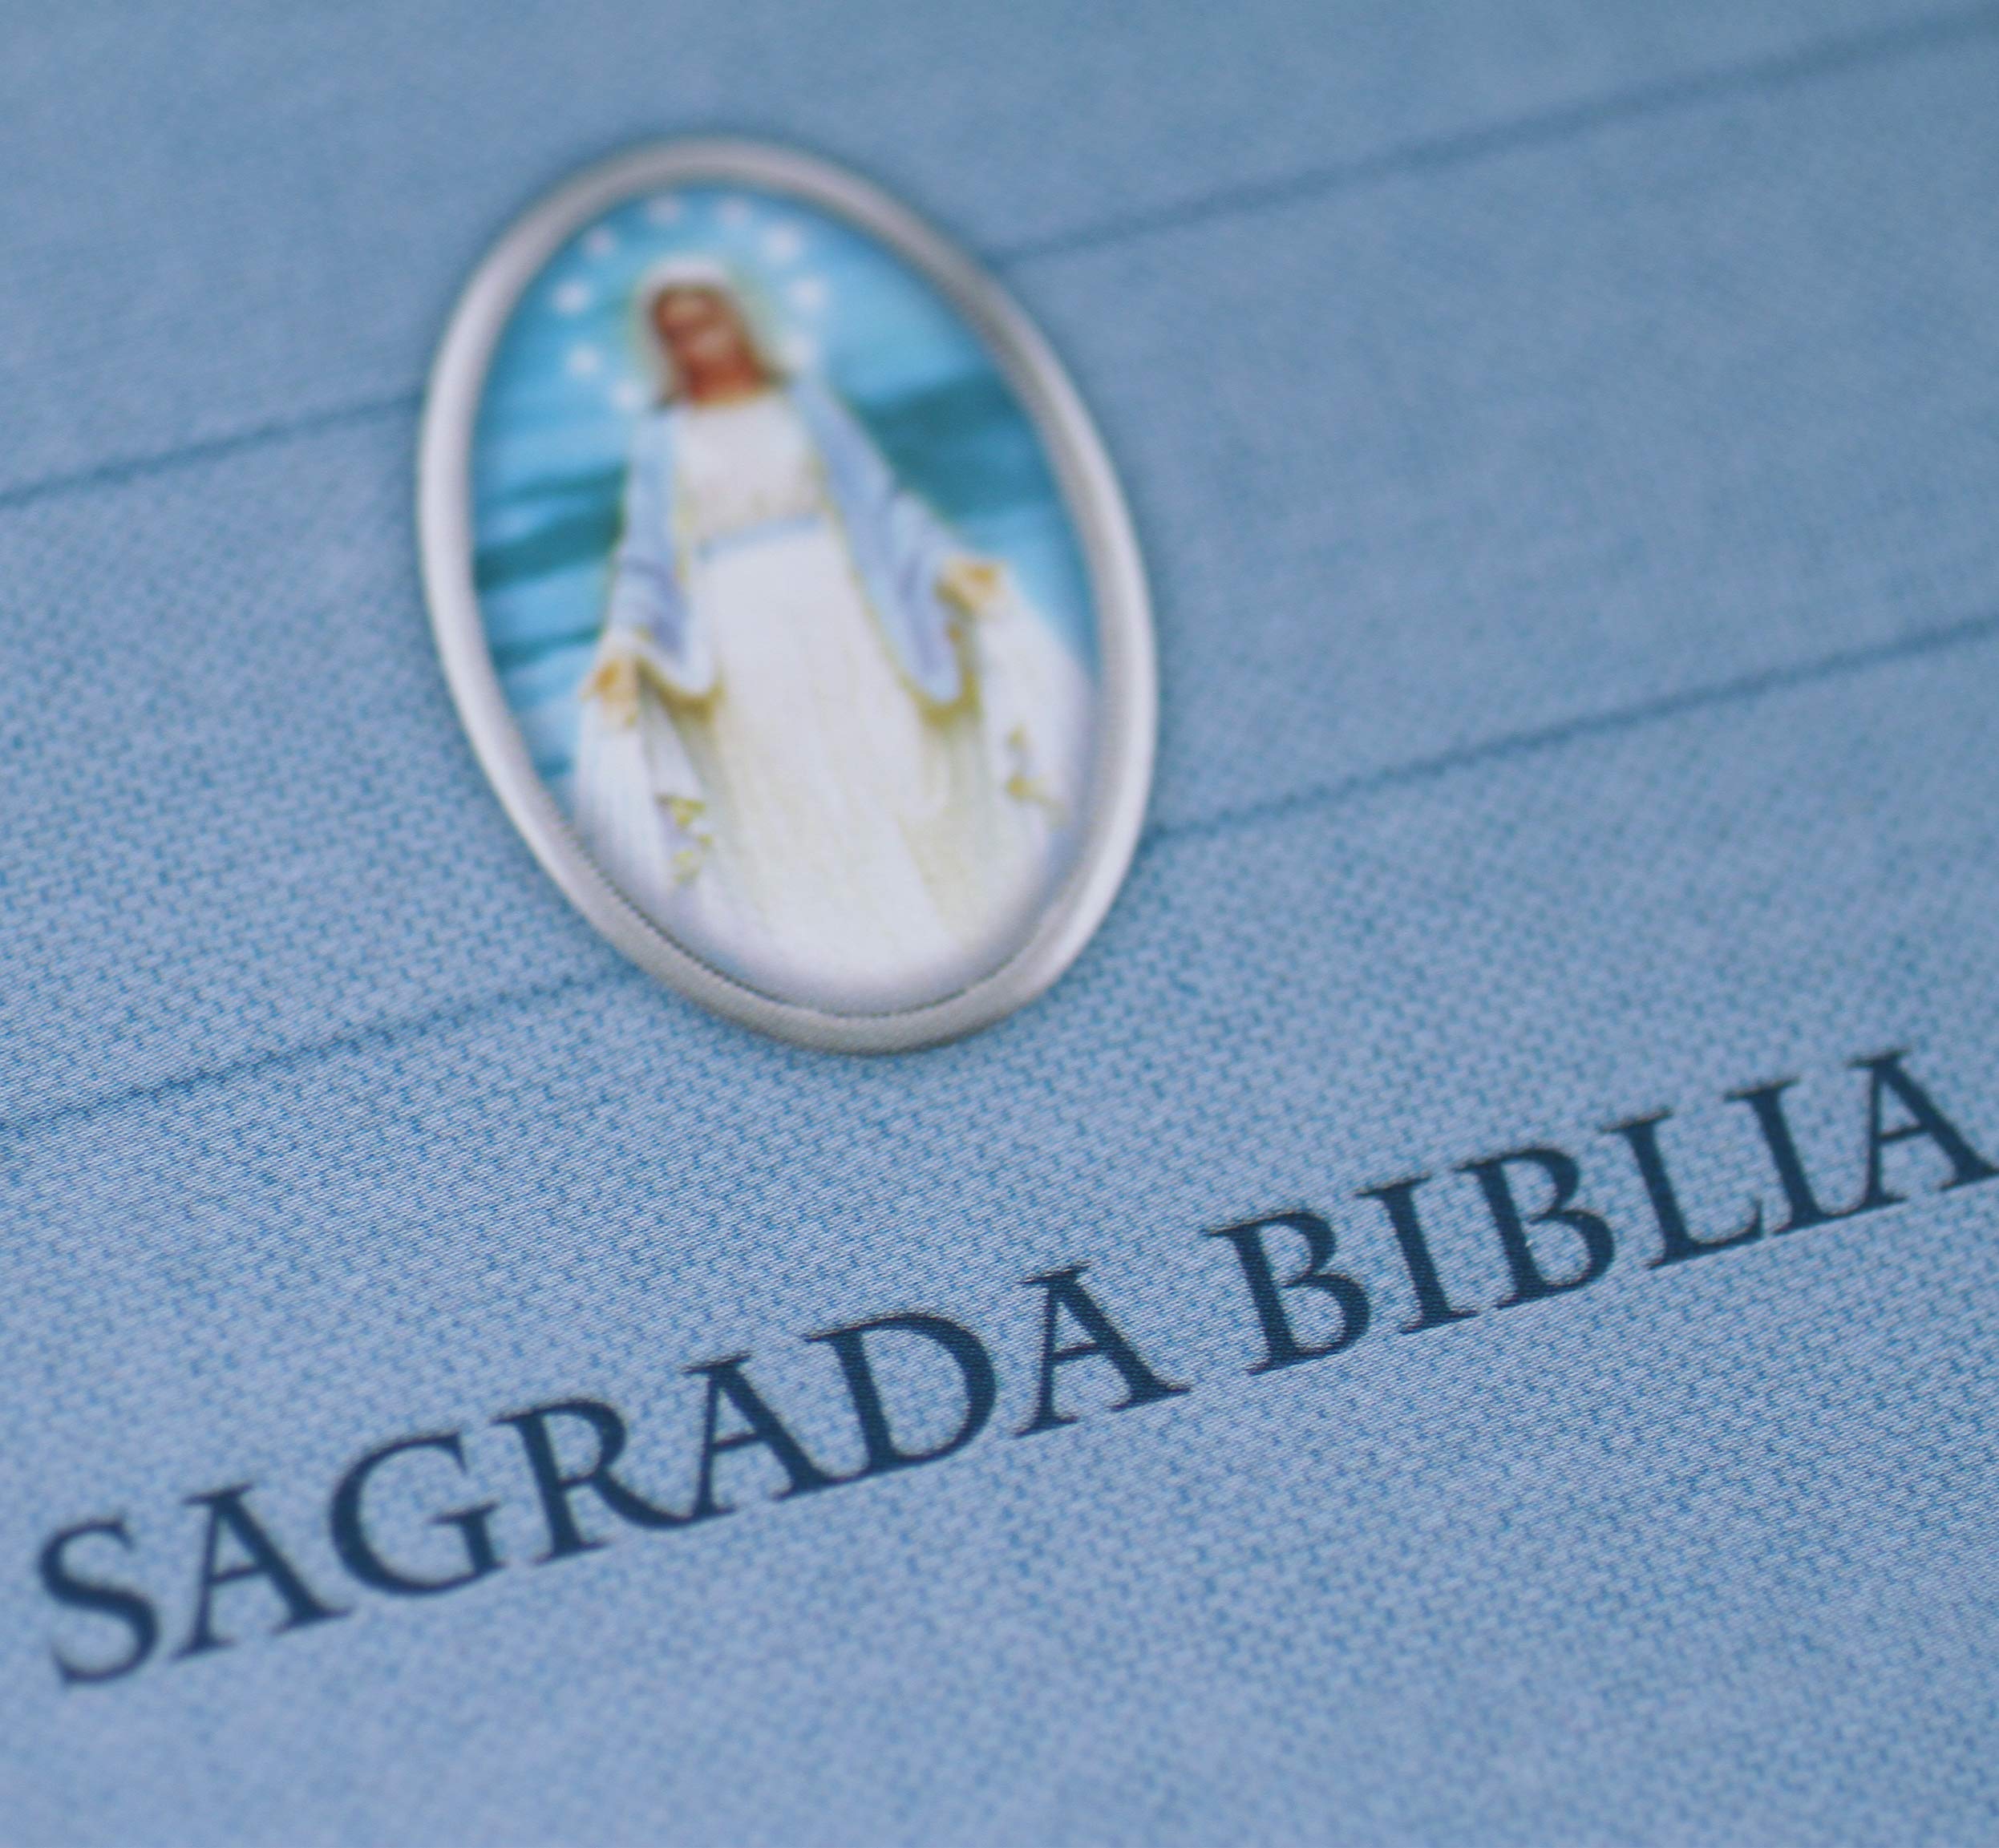 Biblia Católica en español. Tapa dura azul, con Virgen Milagrosa en cubierta / Catholic Bible. Spanish-Language, Hardcover, Blue, Compact